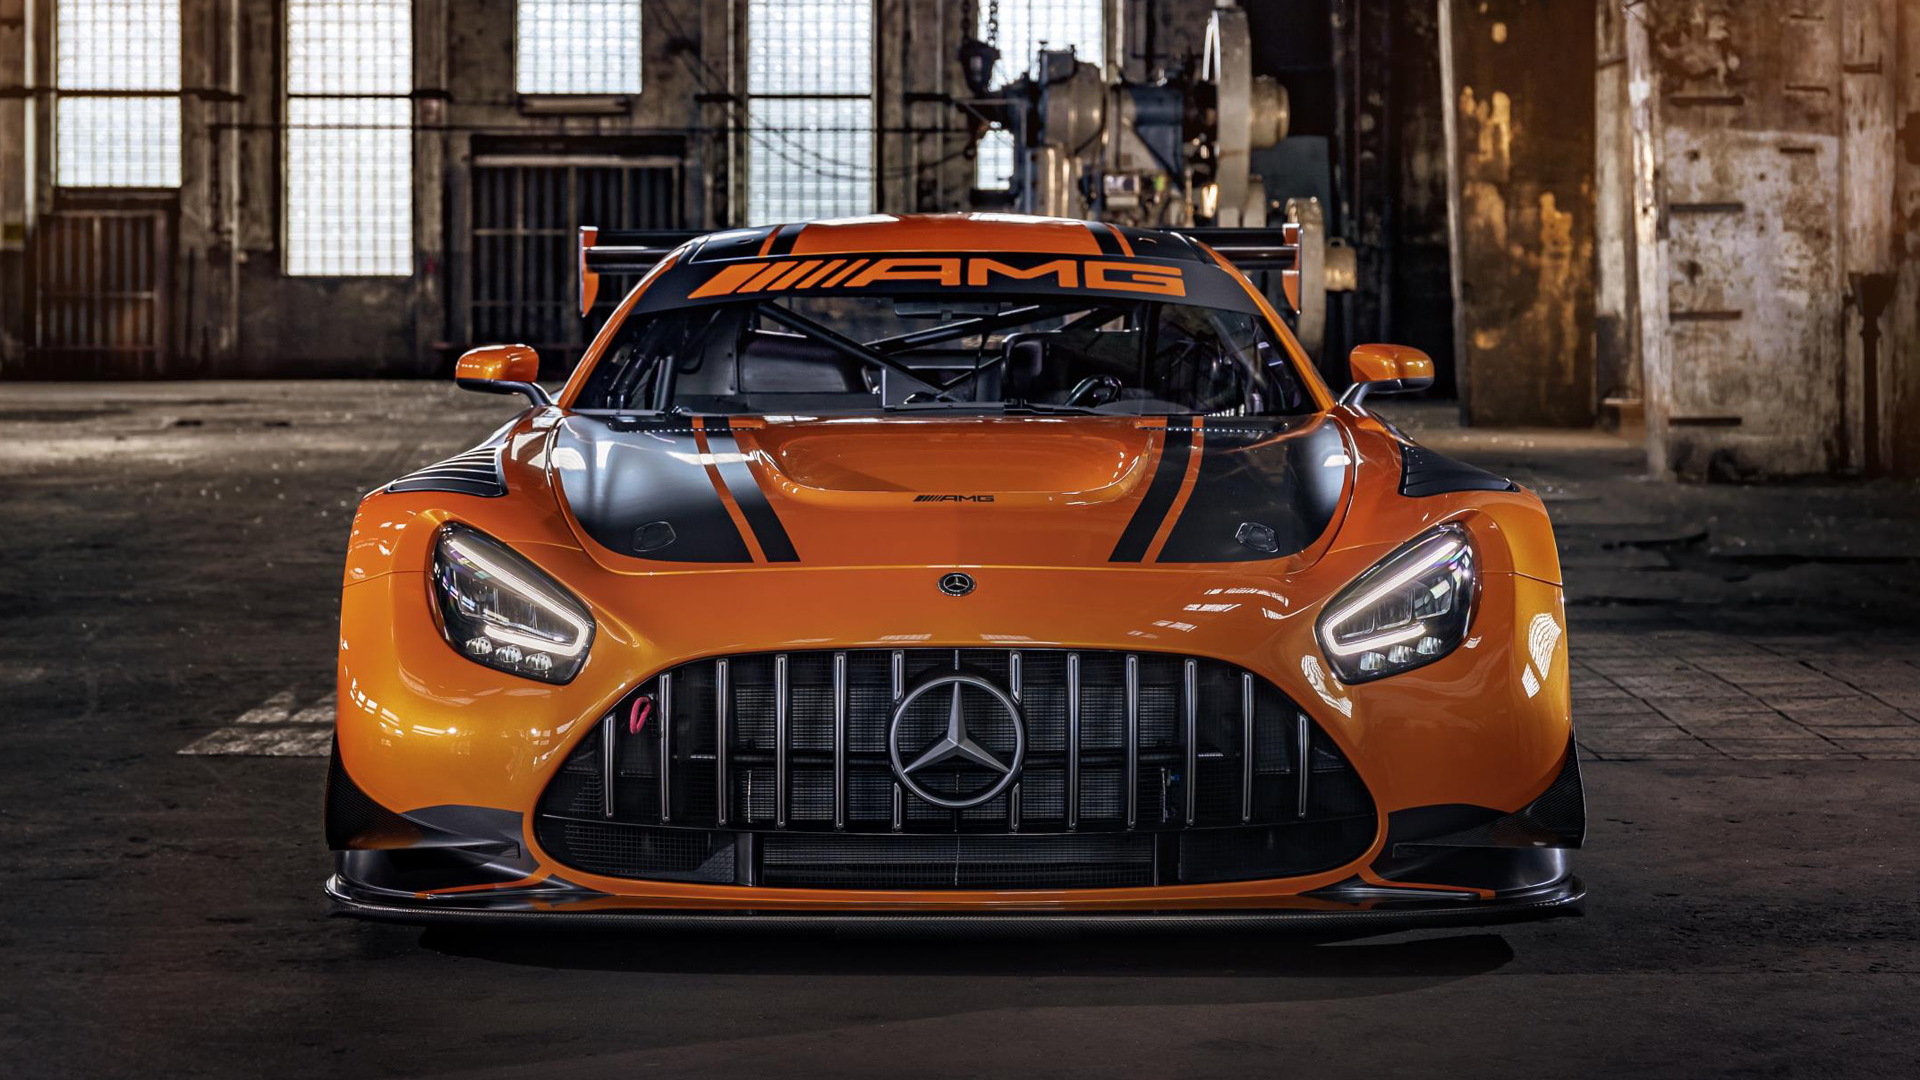 2020 Mercedes-AMG GT3 race car